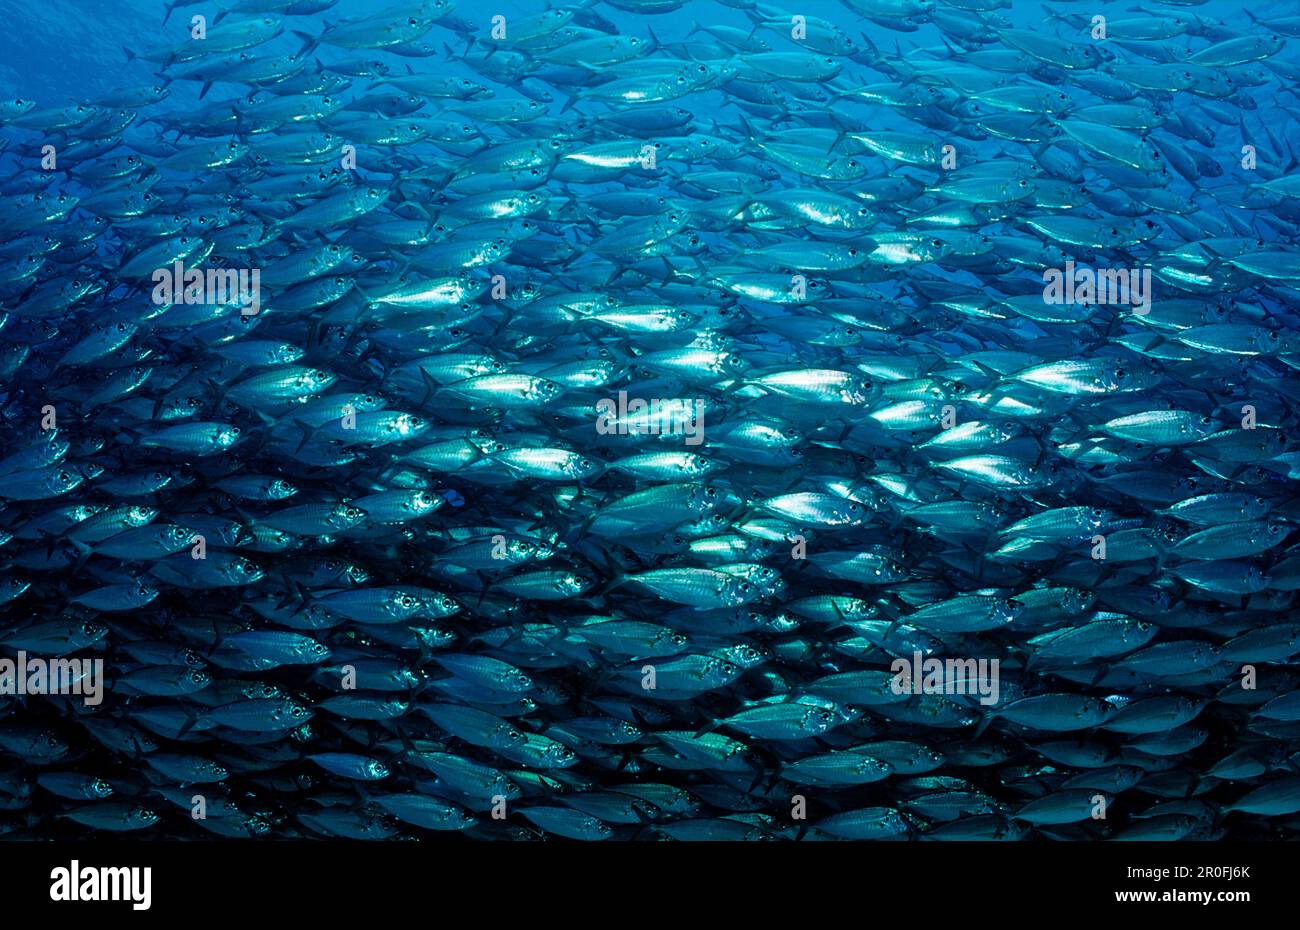 Schooling Pacific chub mackerel, Macarela estornino, Scomber japonicus, Mexico, Sea of Cortez, Baja California, La Paz Stock Photo